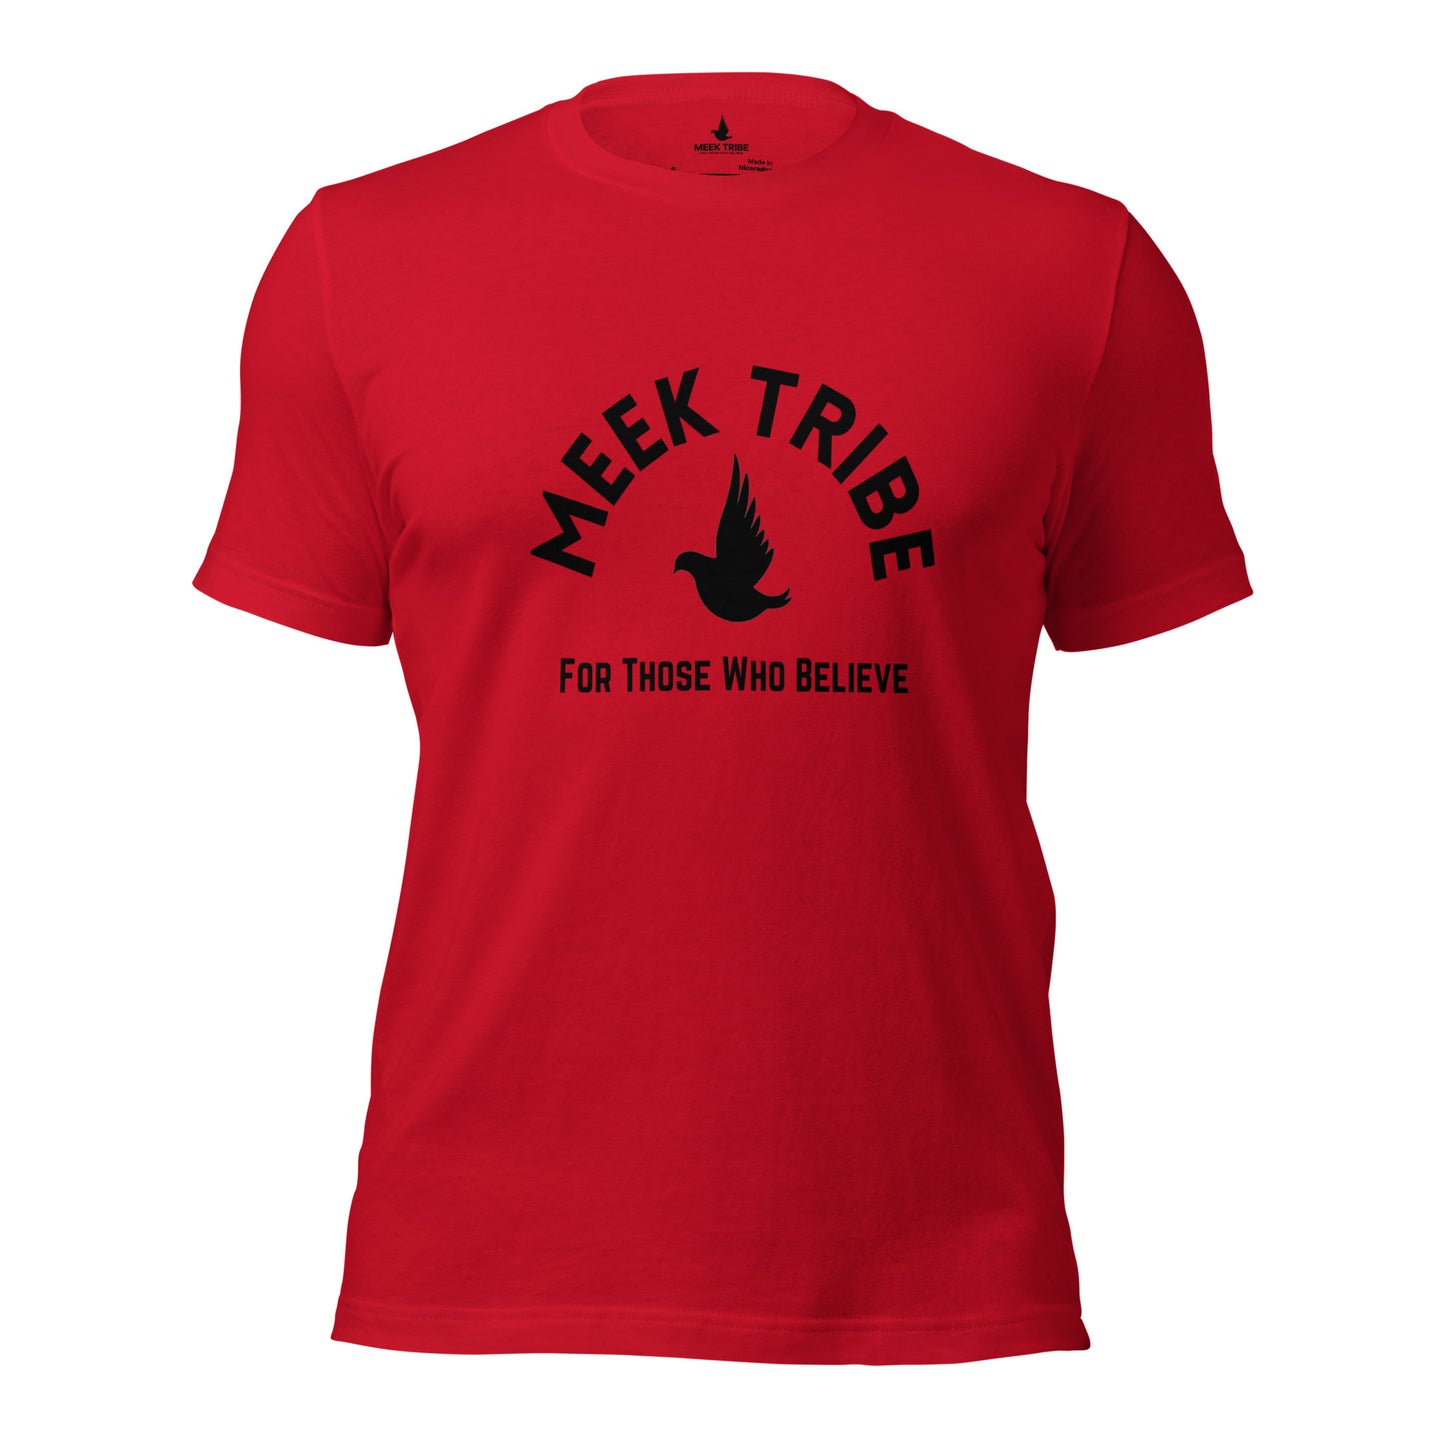 Meek Tribe "Classic 2" Men's T-Shirt